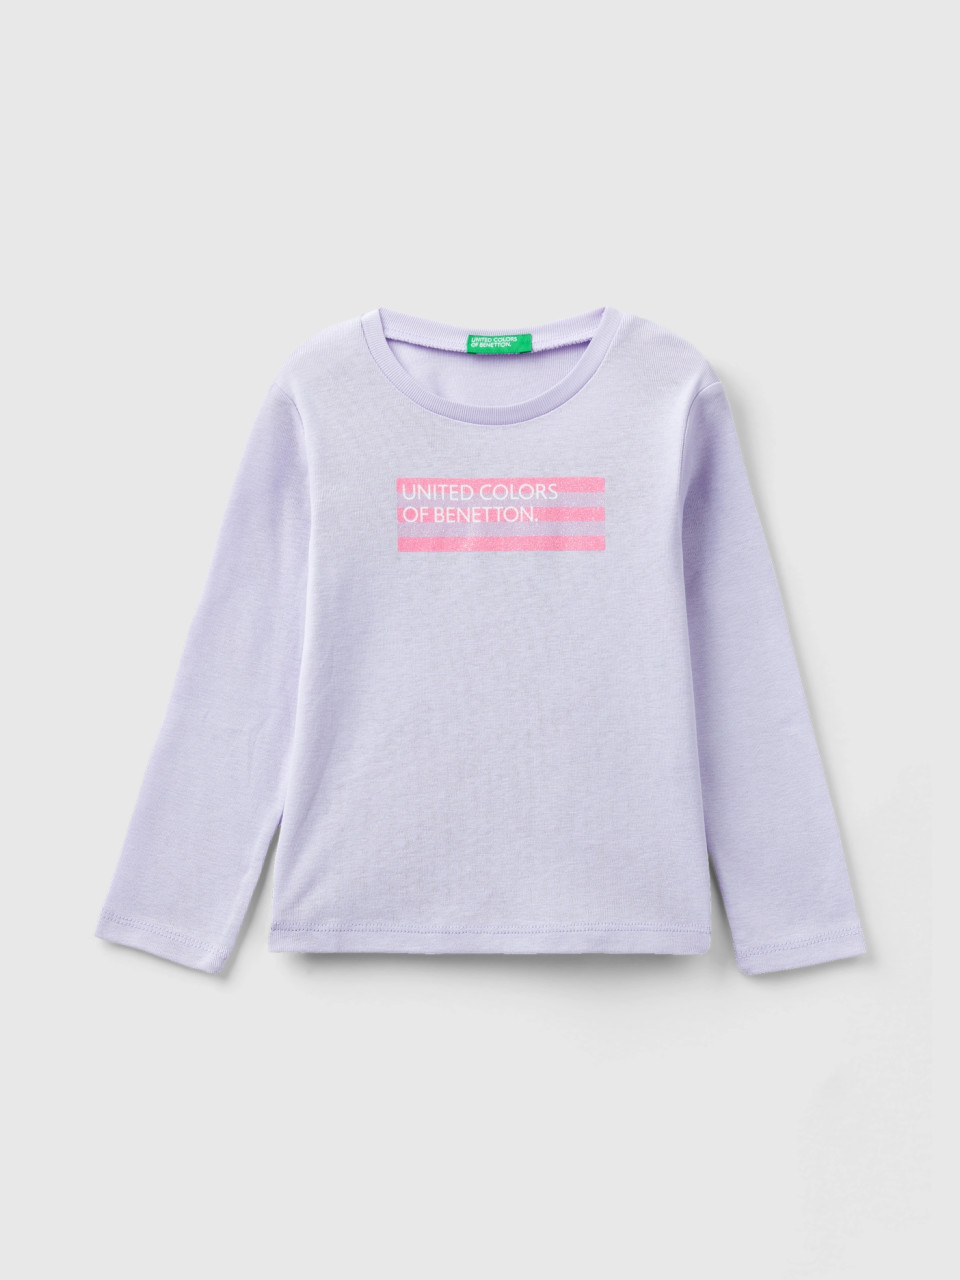 Benetton, Long Sleeve T-shirt With Glittery Print, Lilac, Kids